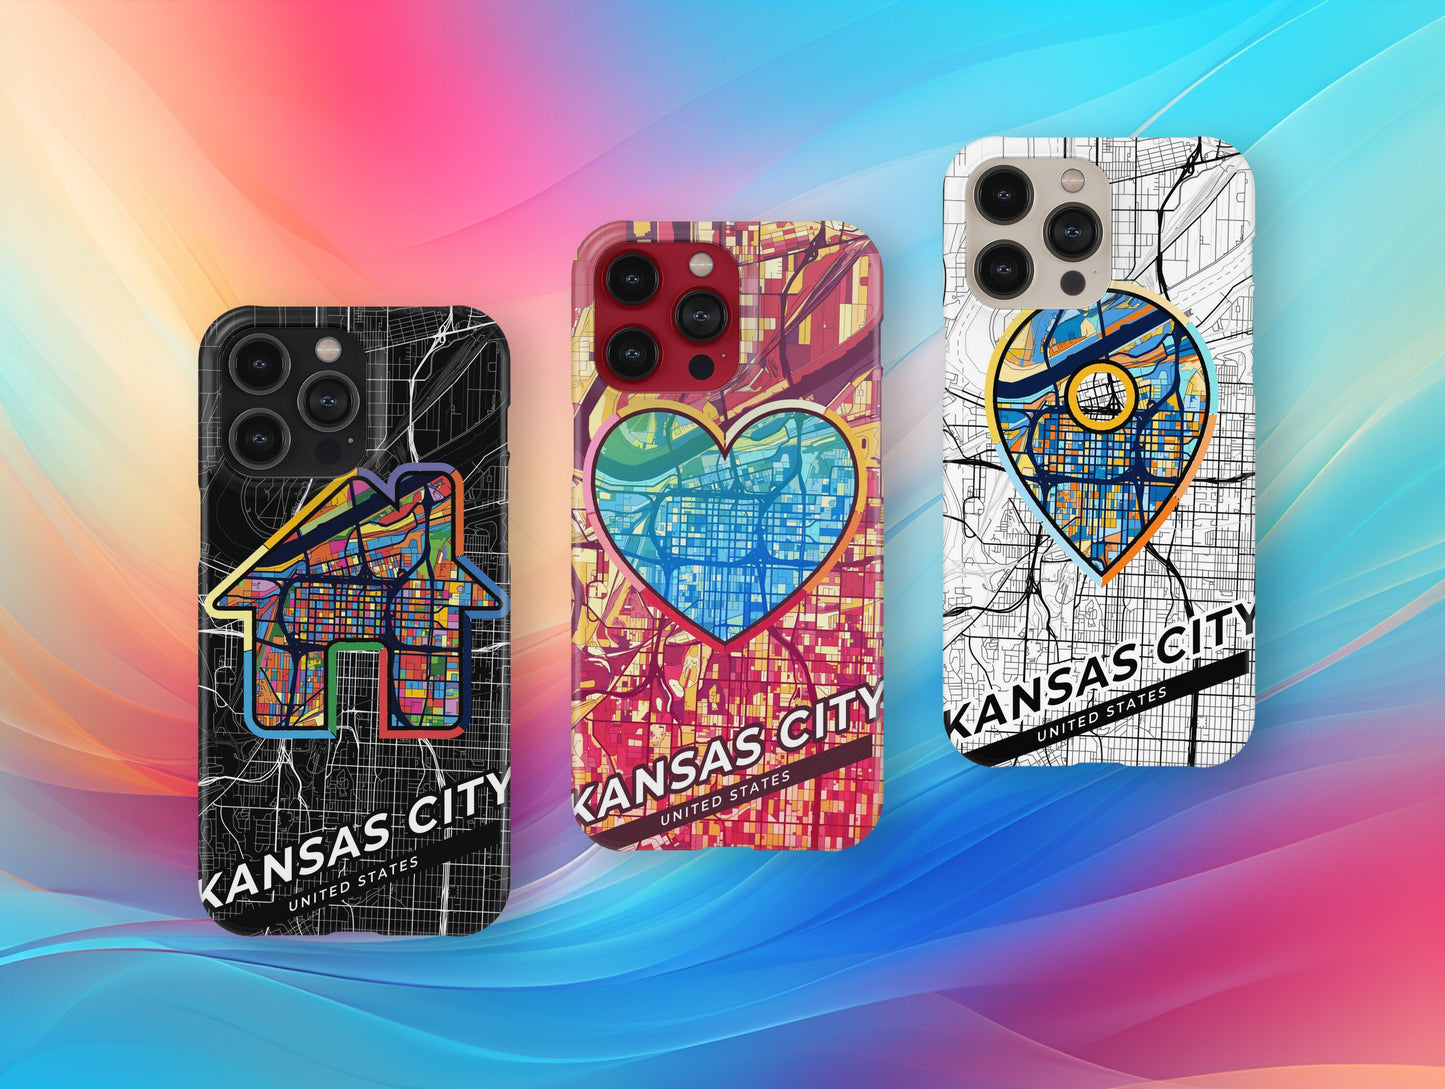 Kansas City Missouri slim phone case with colorful icon. Birthday, wedding or housewarming gift. Couple match cases.